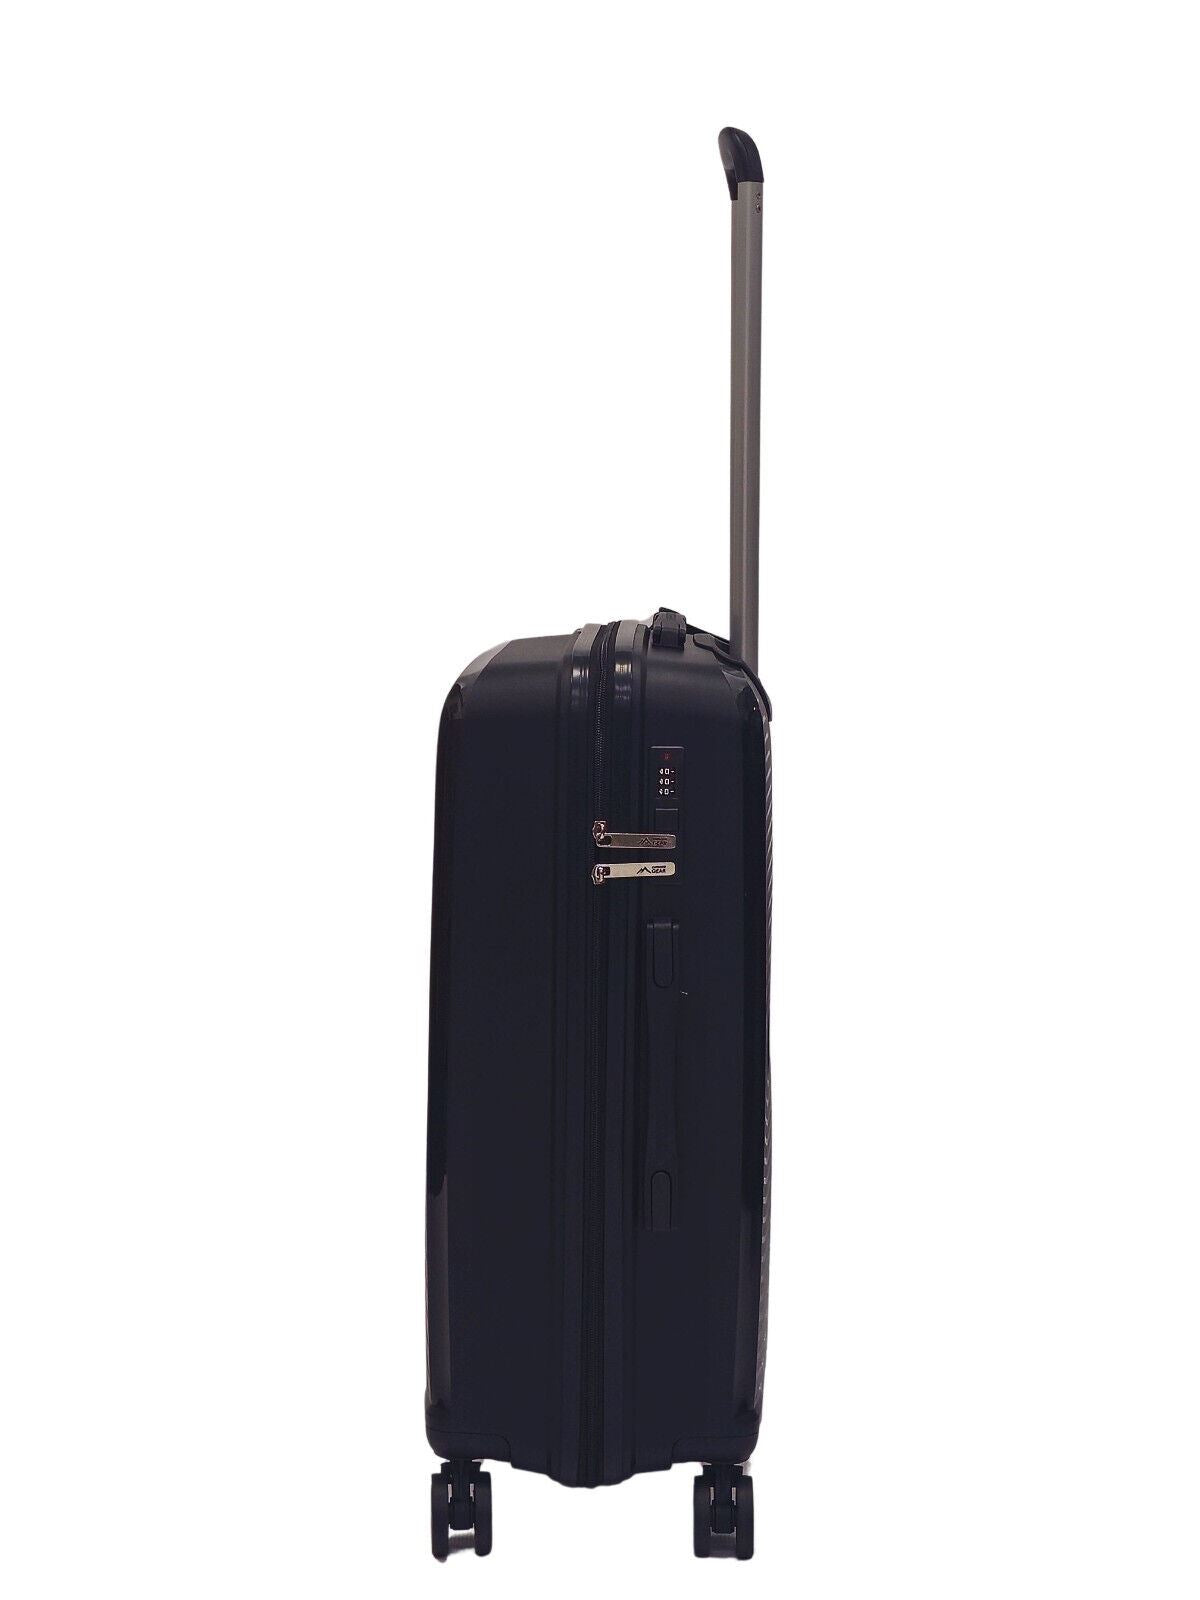 Abbeville Medium Hard Shell Suitcase in Black